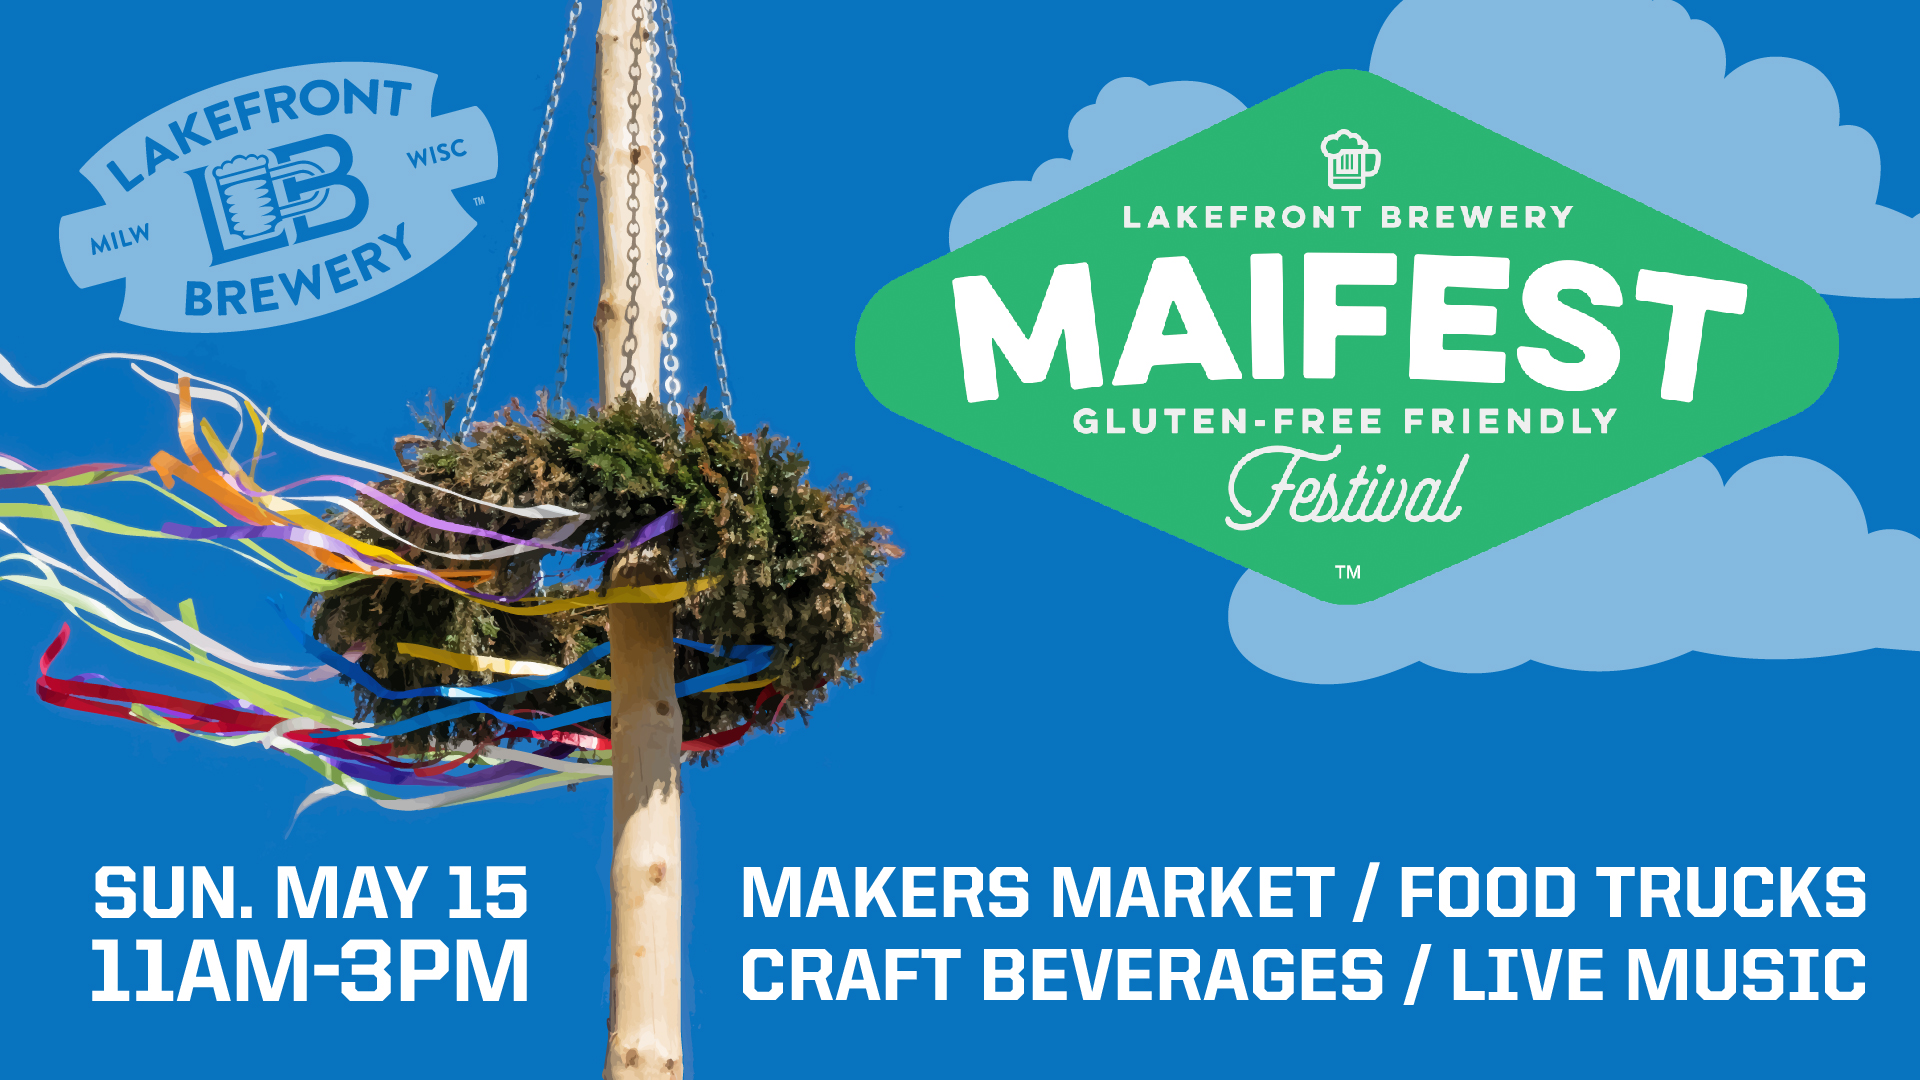 Lakefront Brewery Hosts Inaugural Gluten-free Friendly Maifest